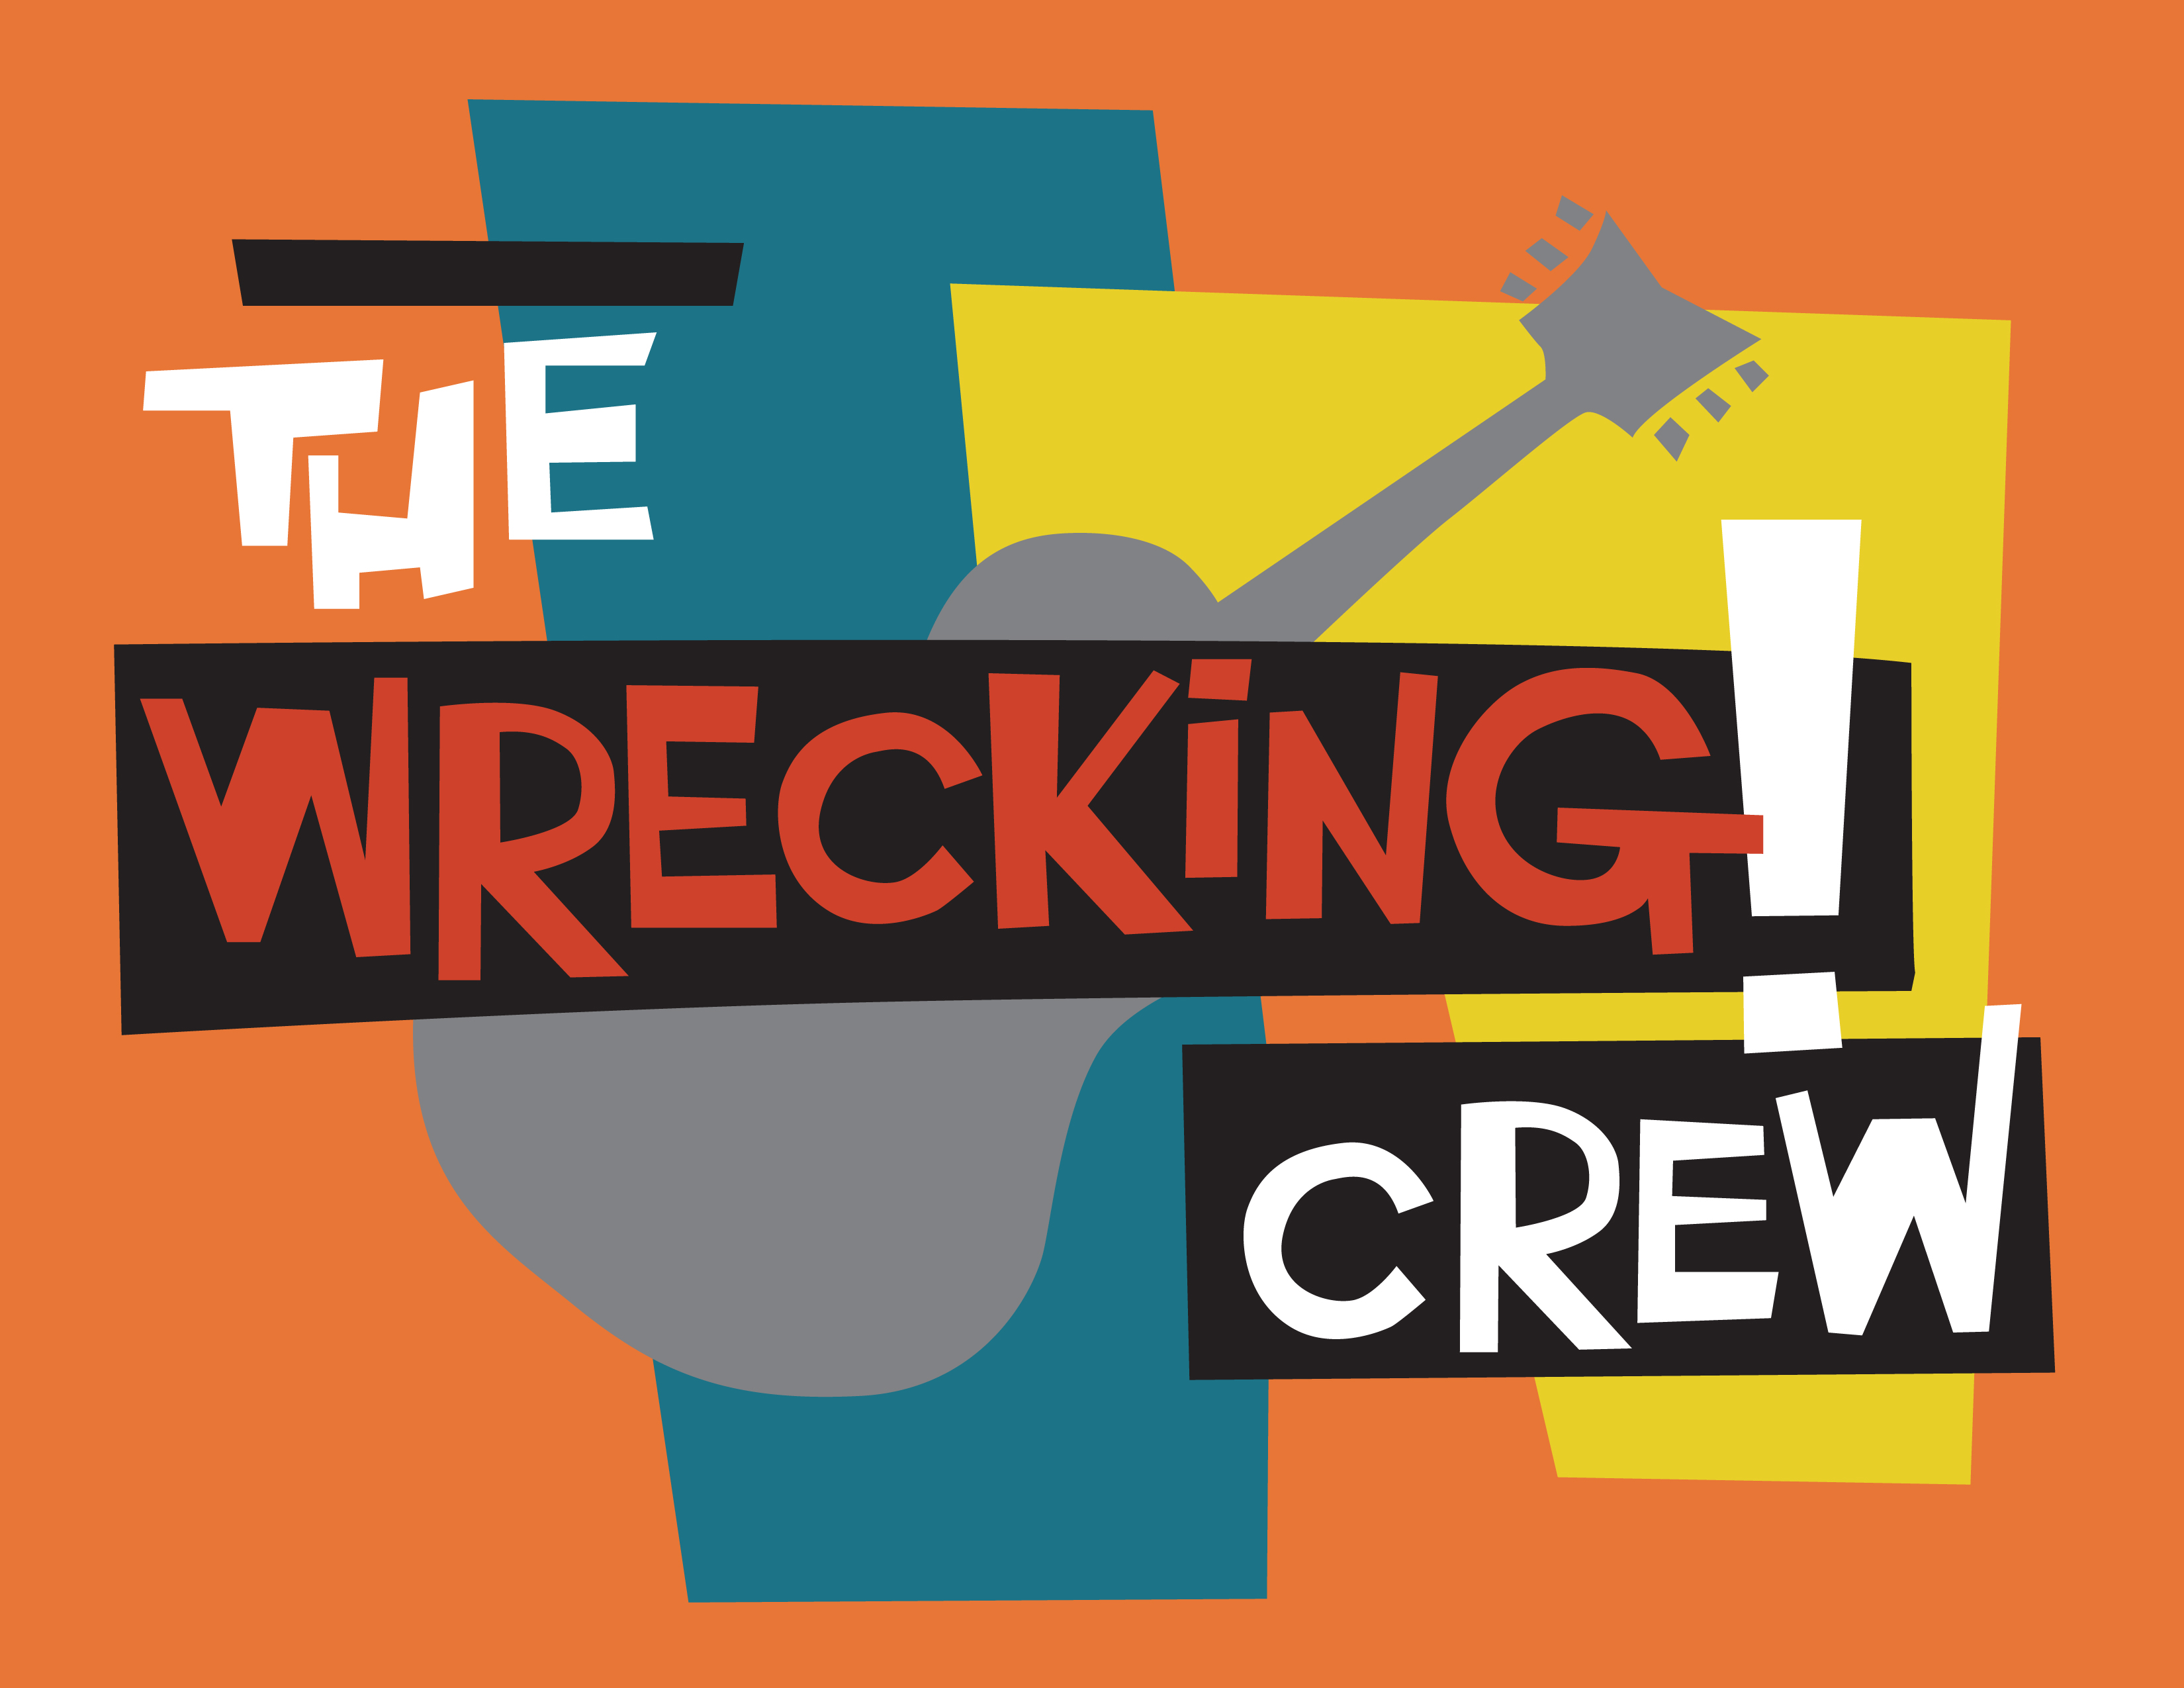 WreckingCrewLogo.jpg